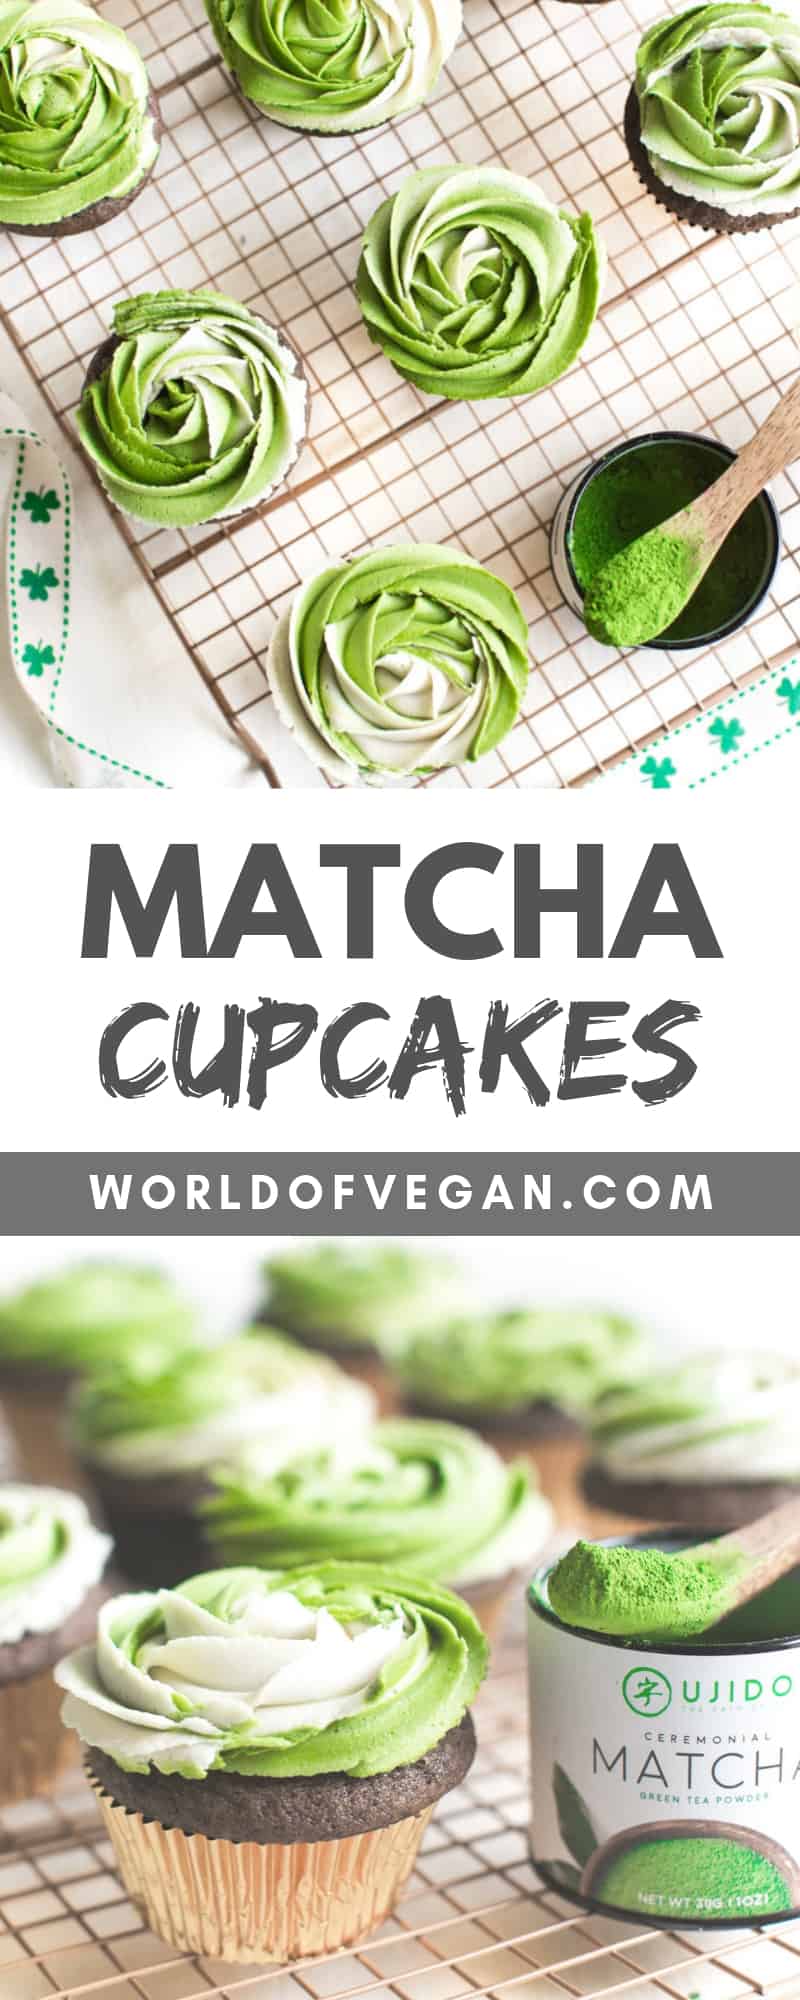 Vegan Matcha Cupcakes | St. Patrick's Day | WorldofVegan.com | #vegan #cupcakes #matcha #dessert #recipe #worldofvegan